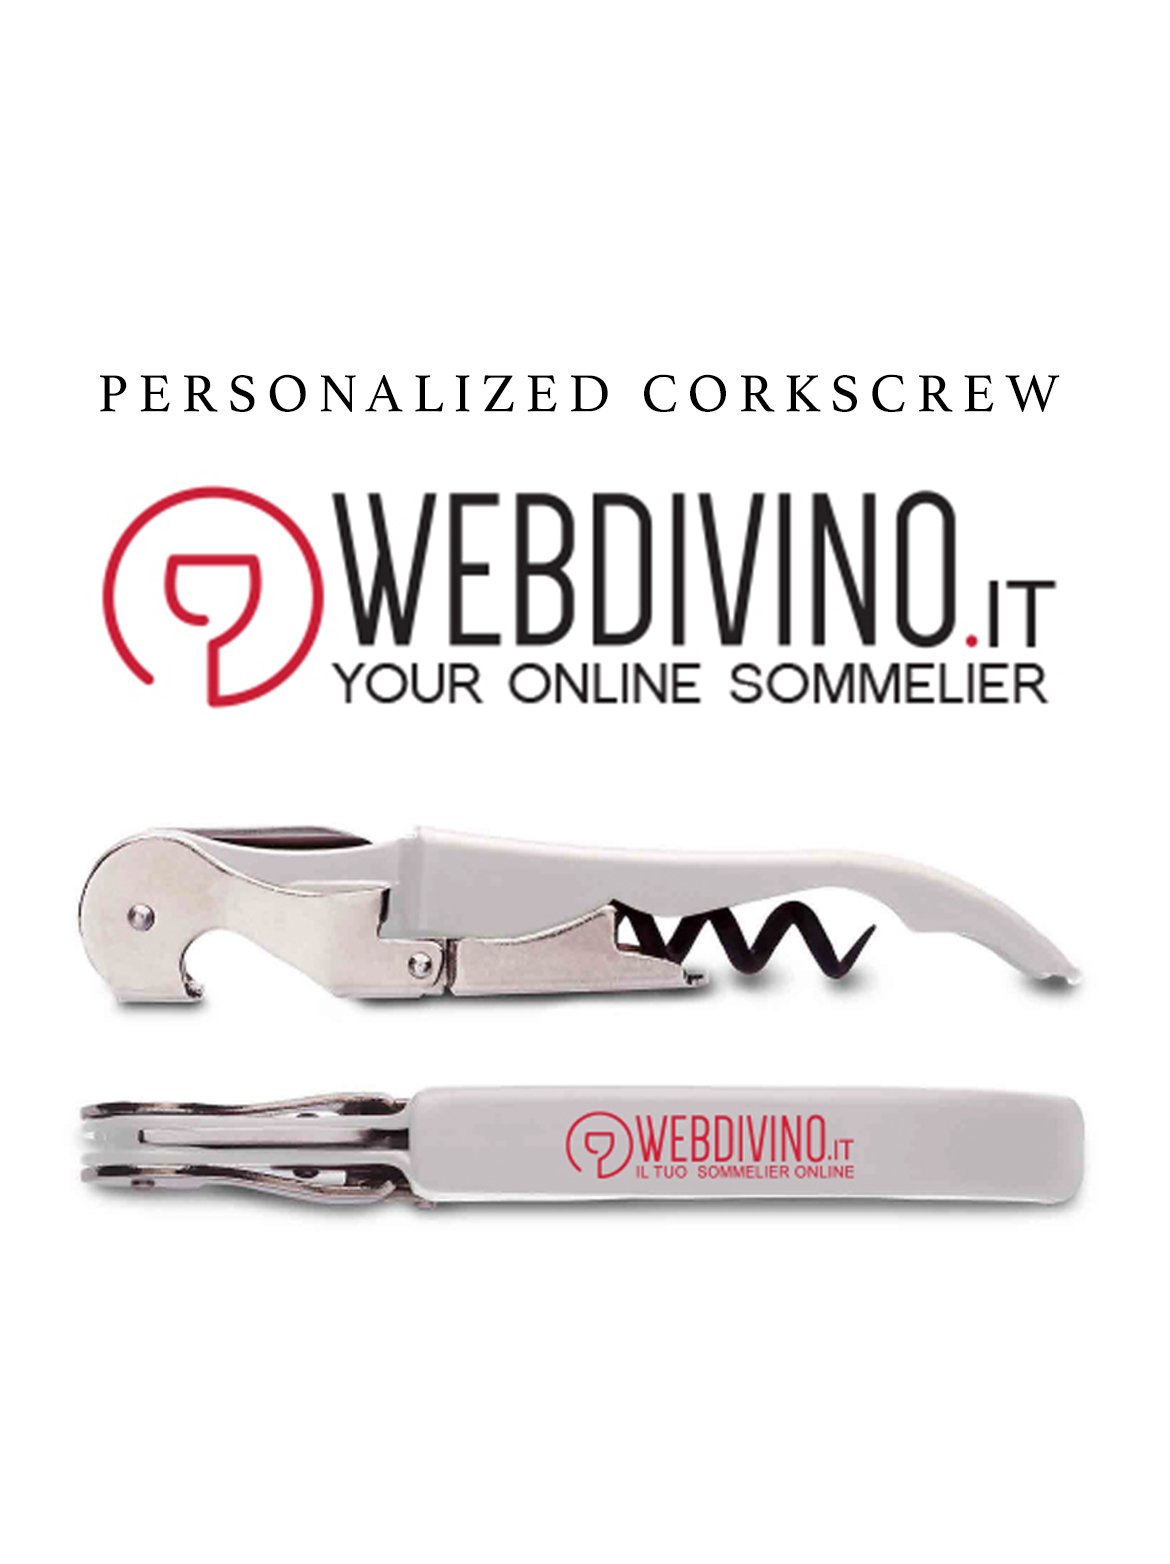 Personalized corkscrew